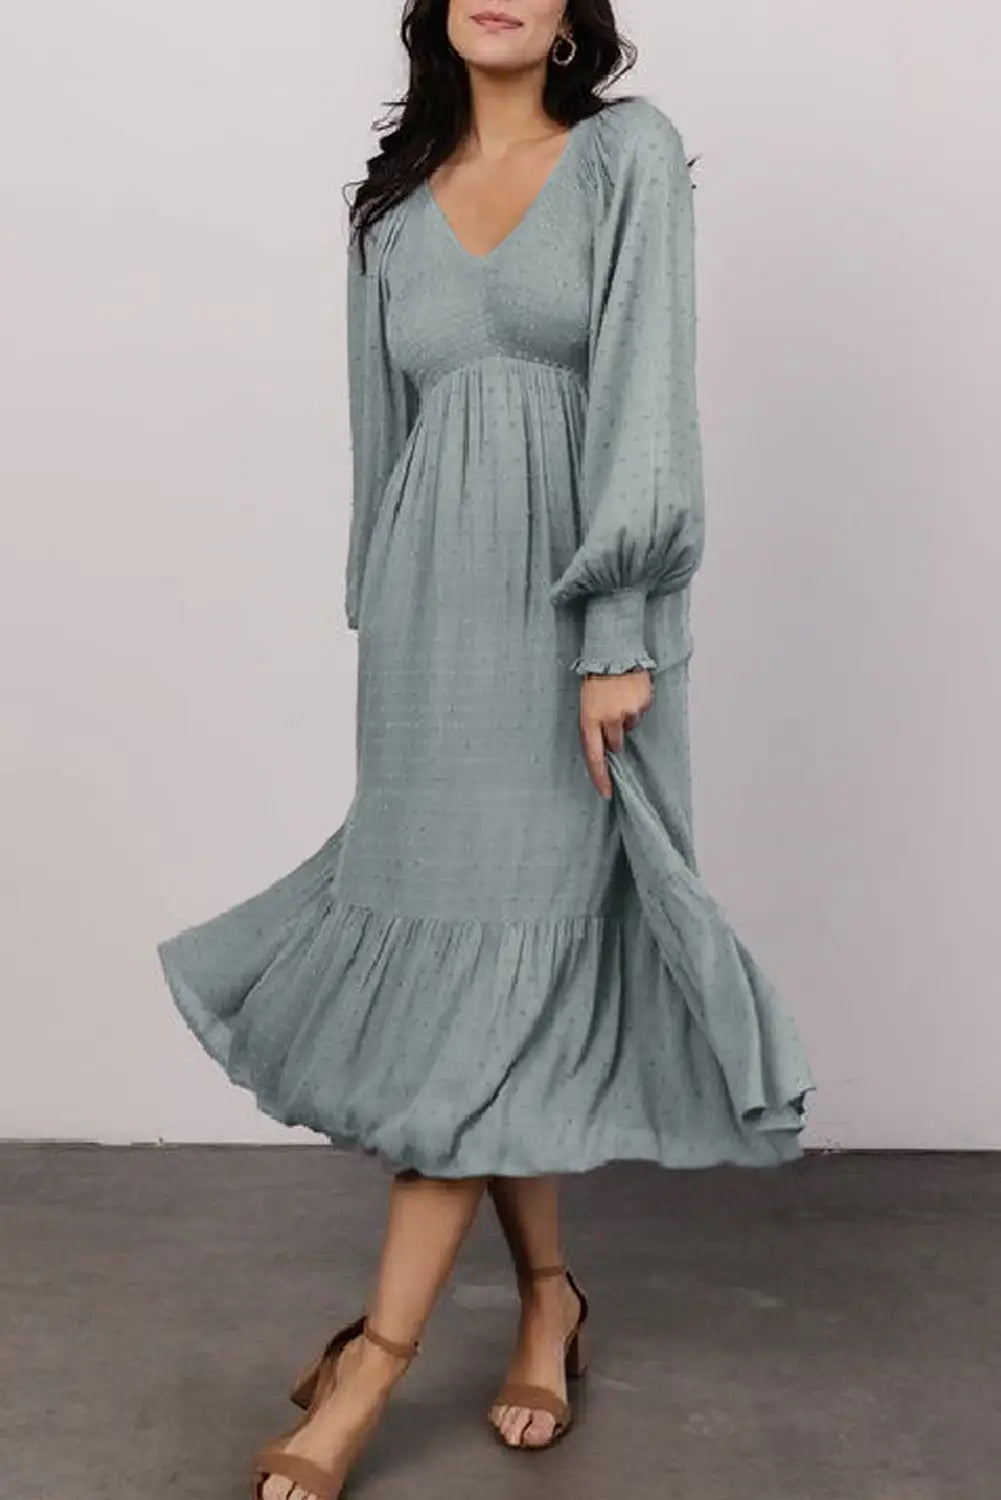 Blue smocked v neck swiss dot ruffle long sleeve dress - s / 100% viscose - midi dresses